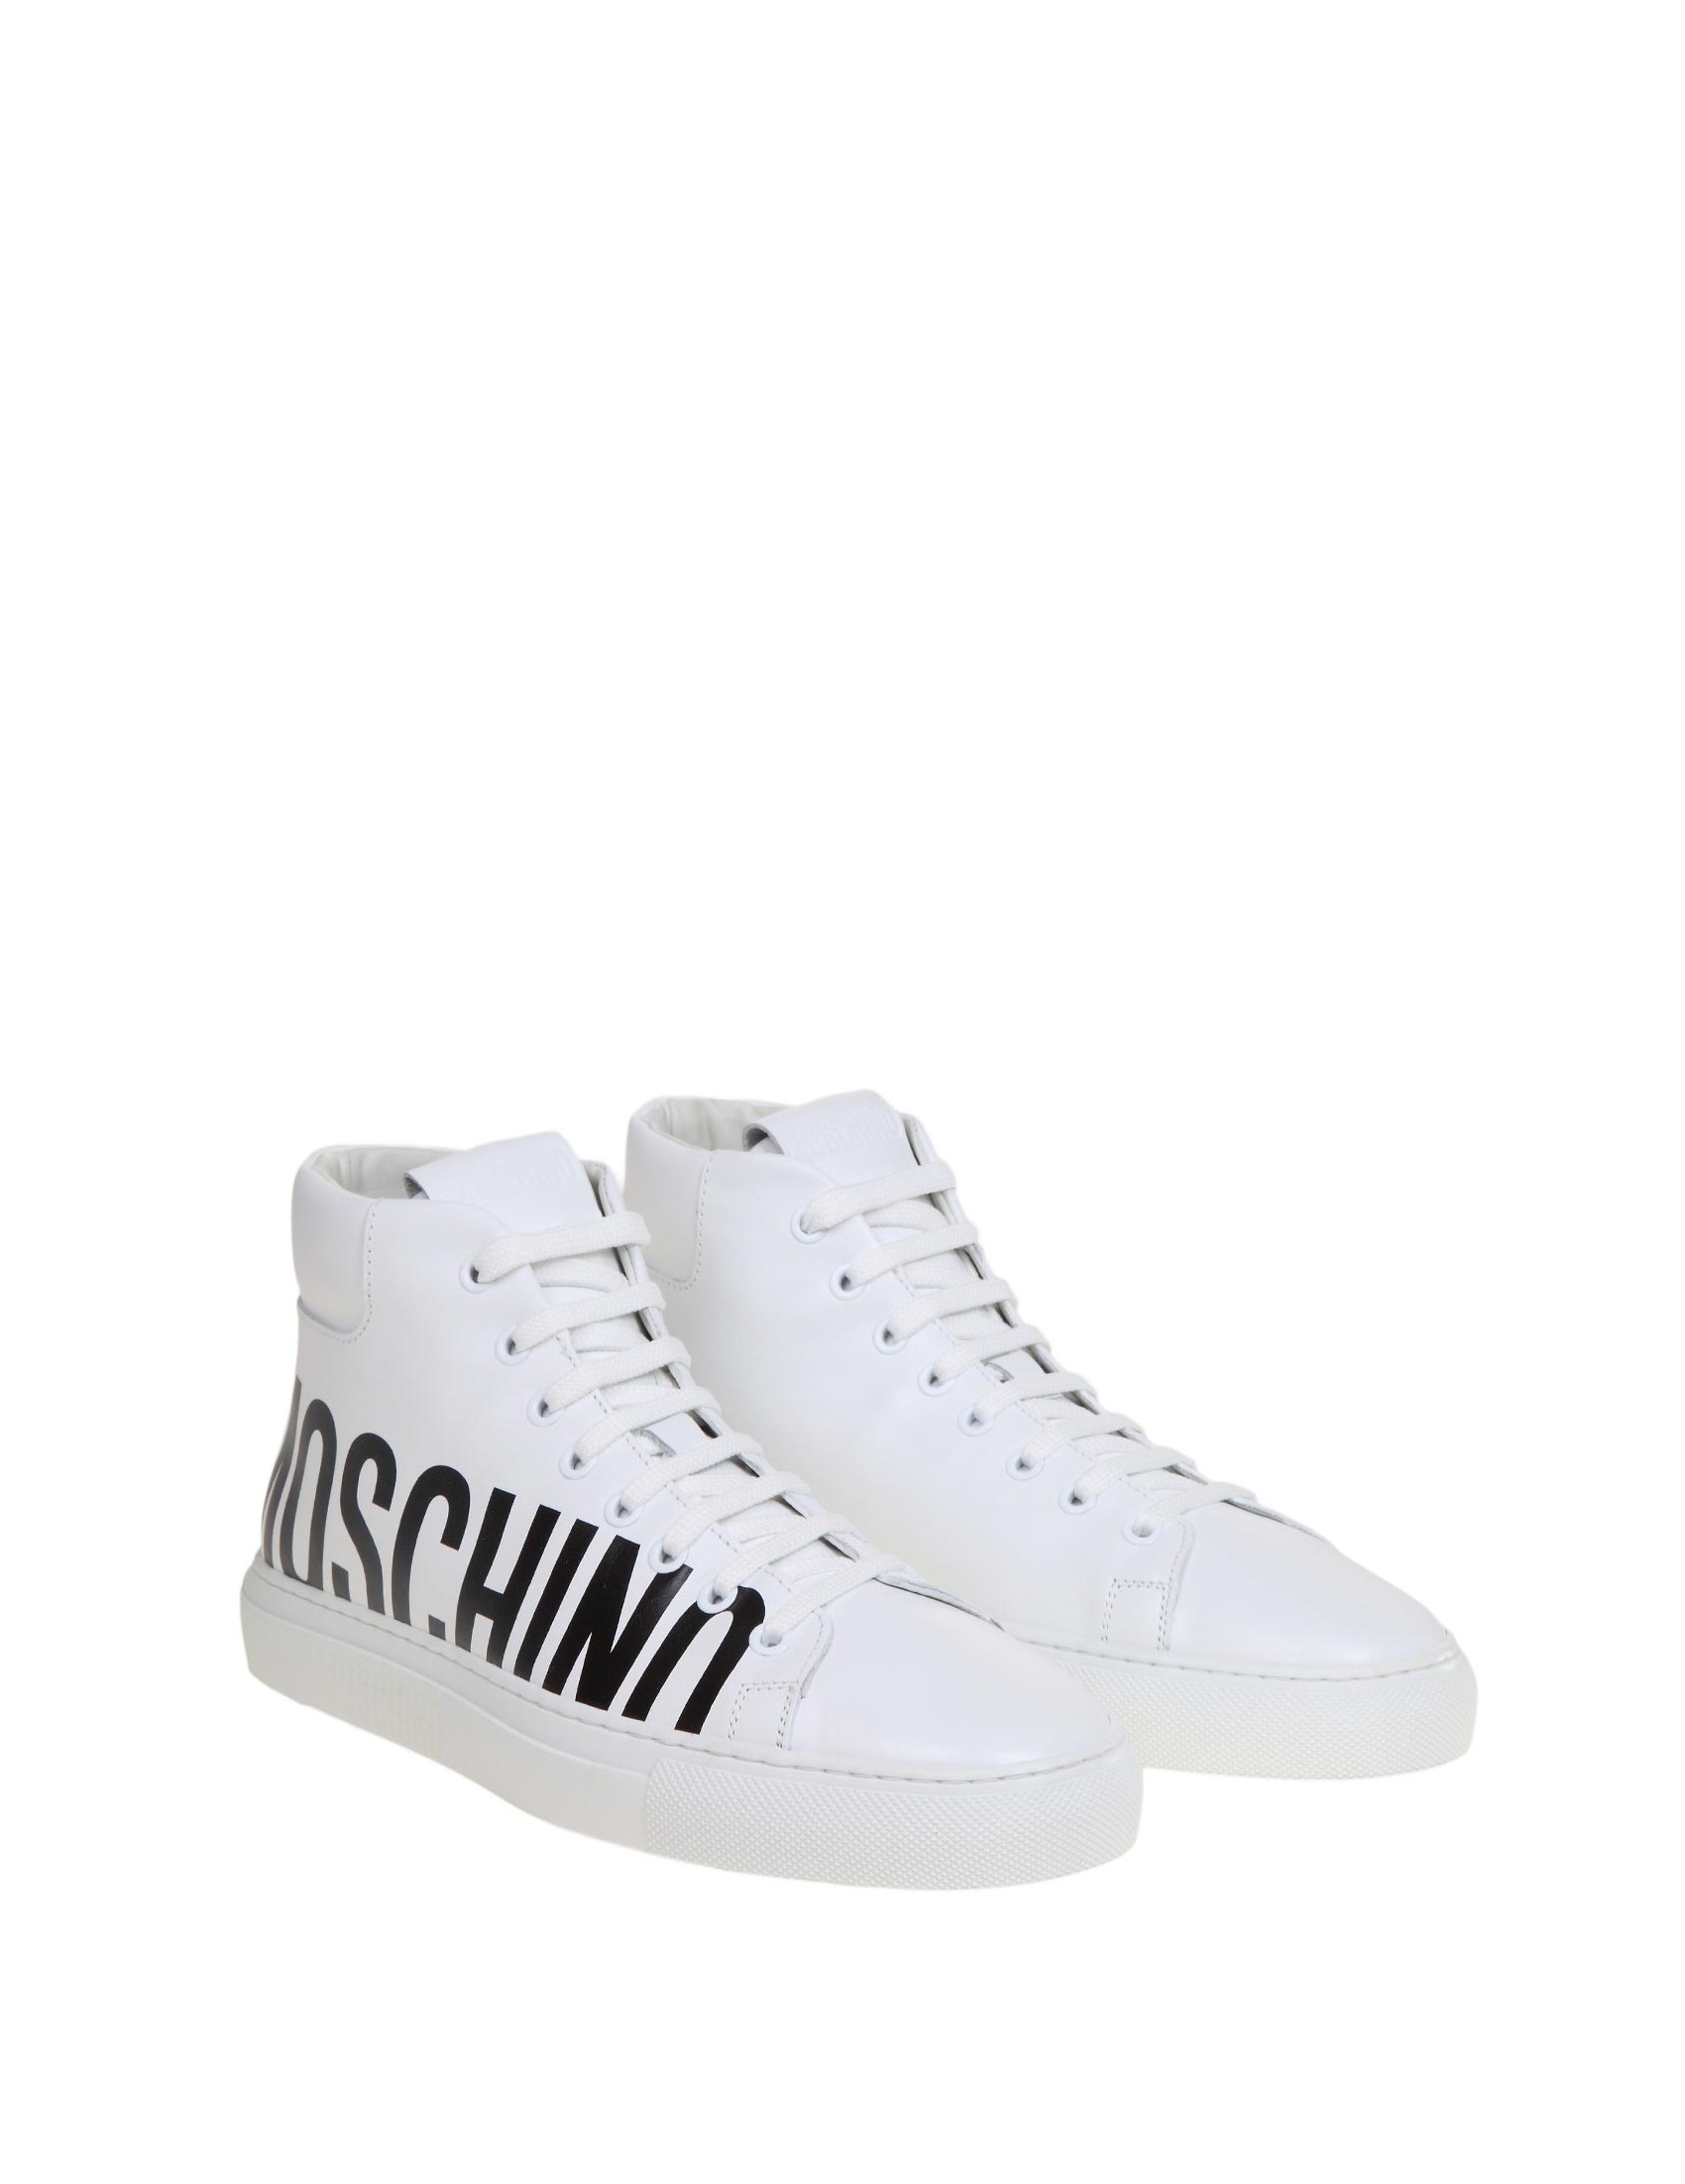 MOSCHINO Men's Shoes Sneakers White NIB Authentic 39 40 41 42 43 | eBay